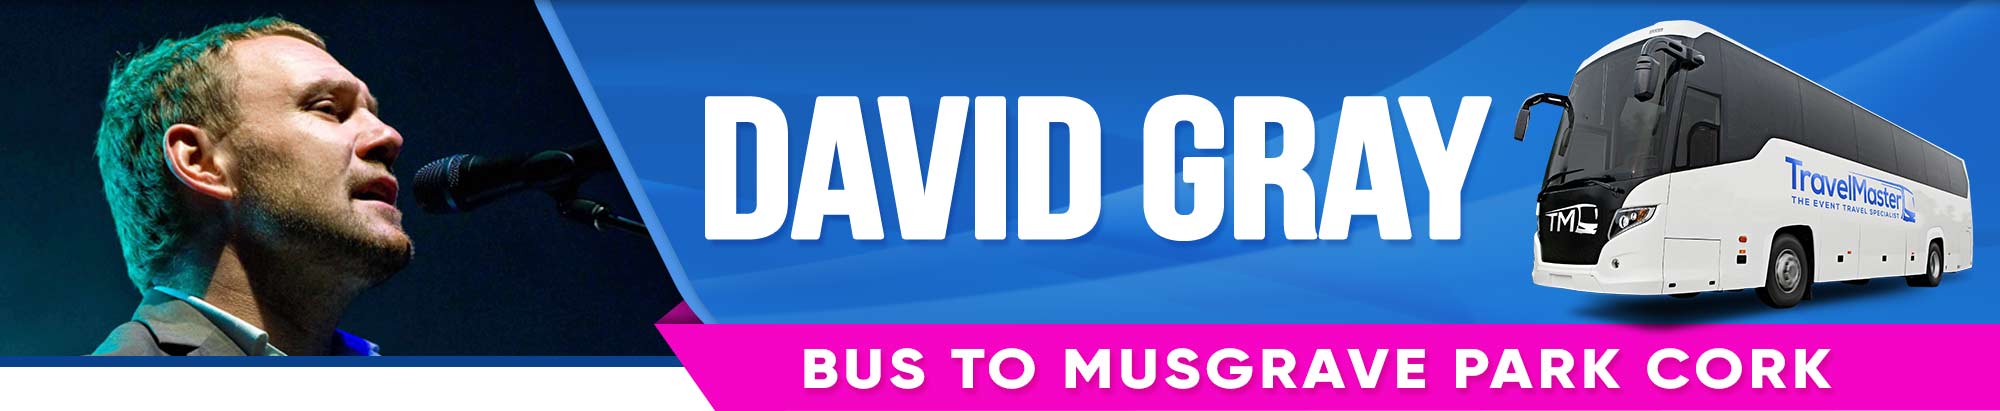 Bus to David Grey Musgrave Park, Nationwide Return